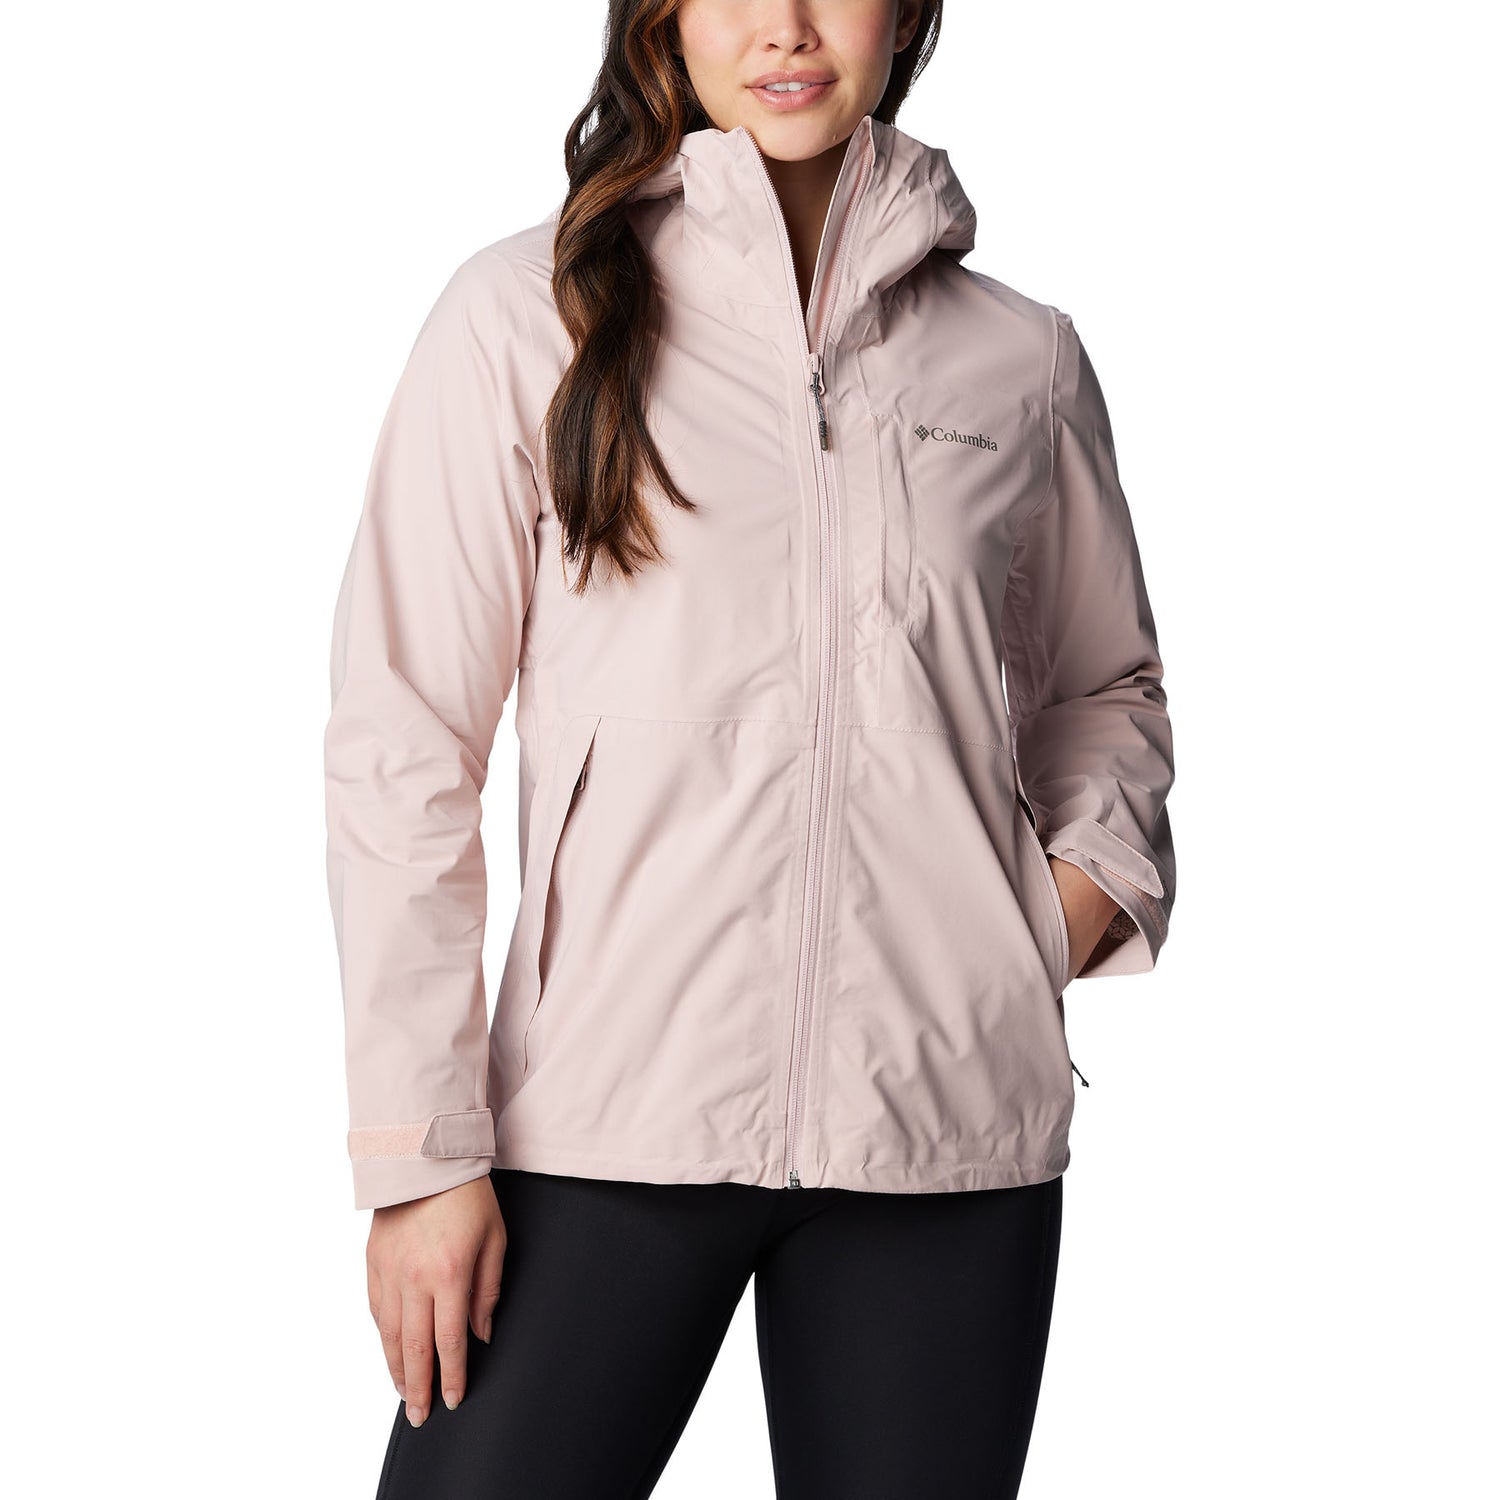 Columbia Women's Ampli-Dry Waterproof Shell Jacket 